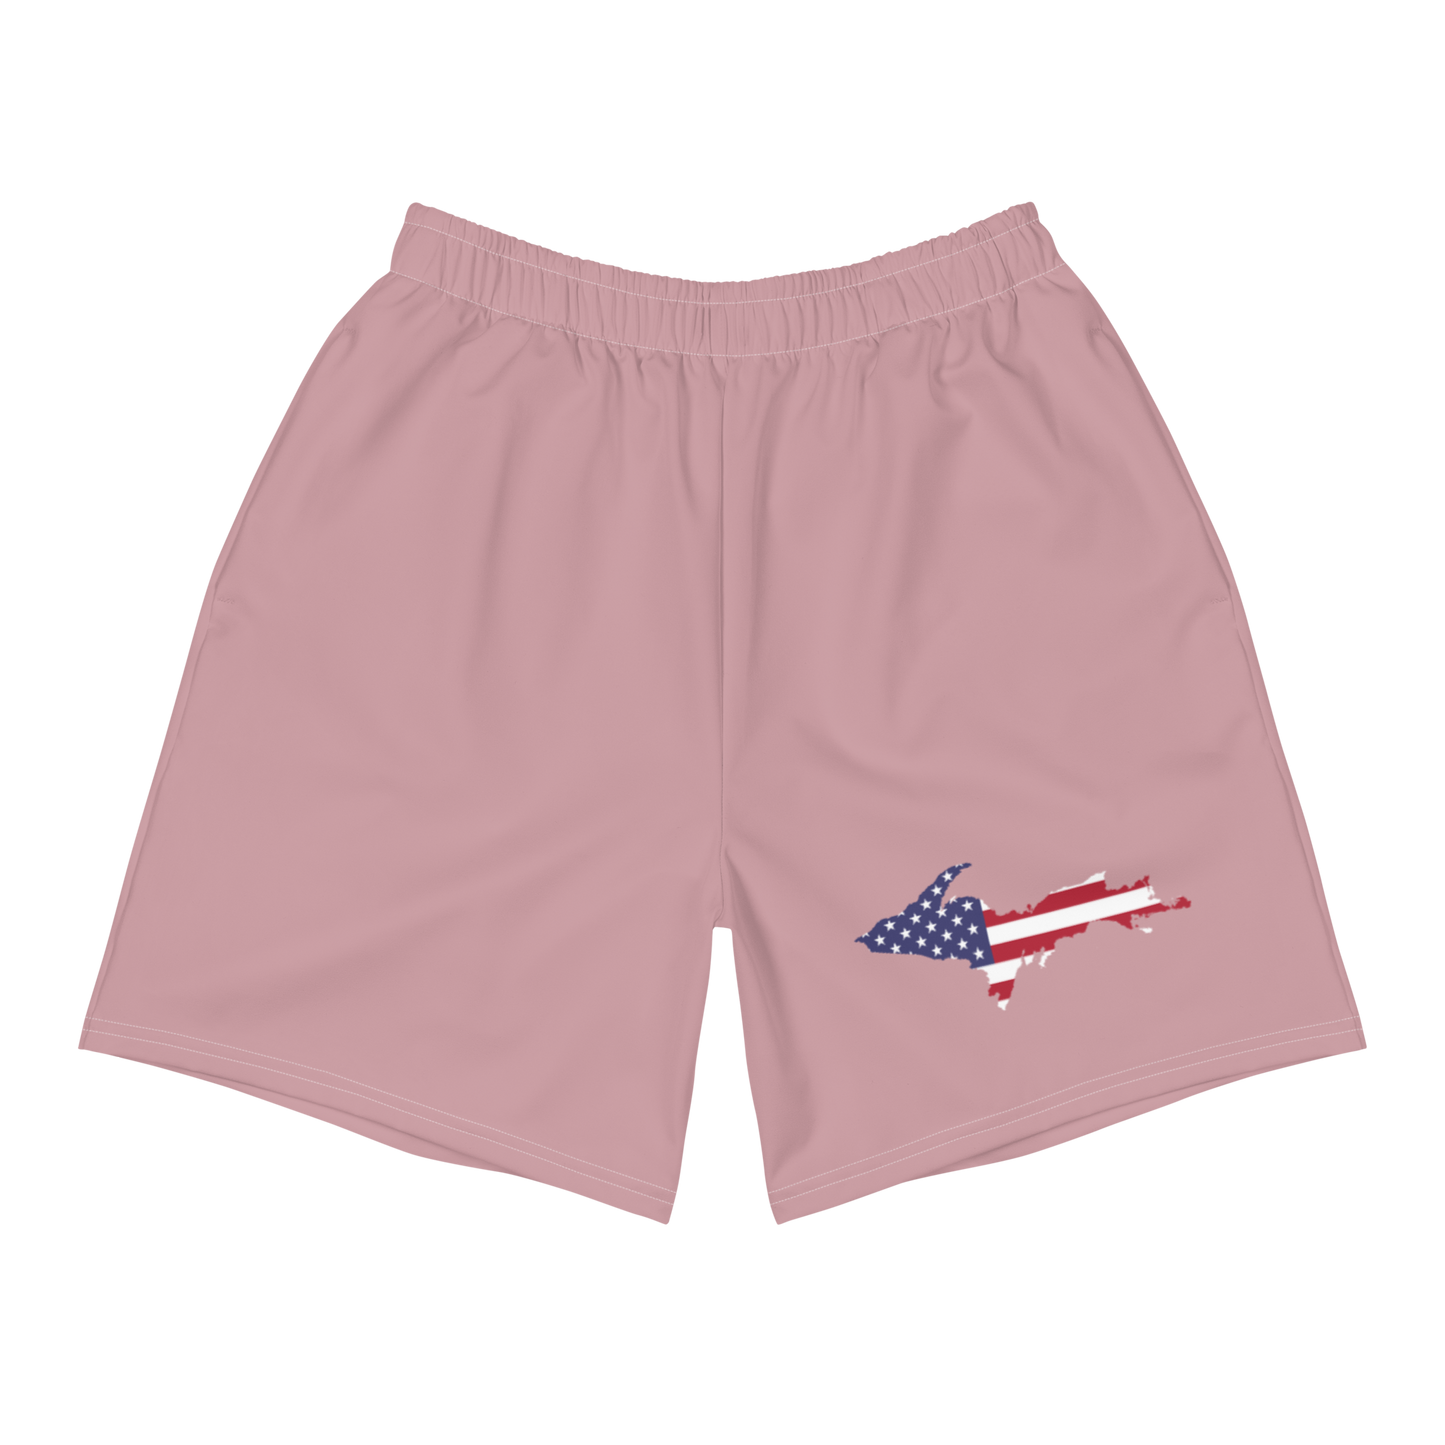 Michigan Upper Peninsula Athletic Shorts (w/ UP USA Flag) | Men's - Cherry Blossom Pink